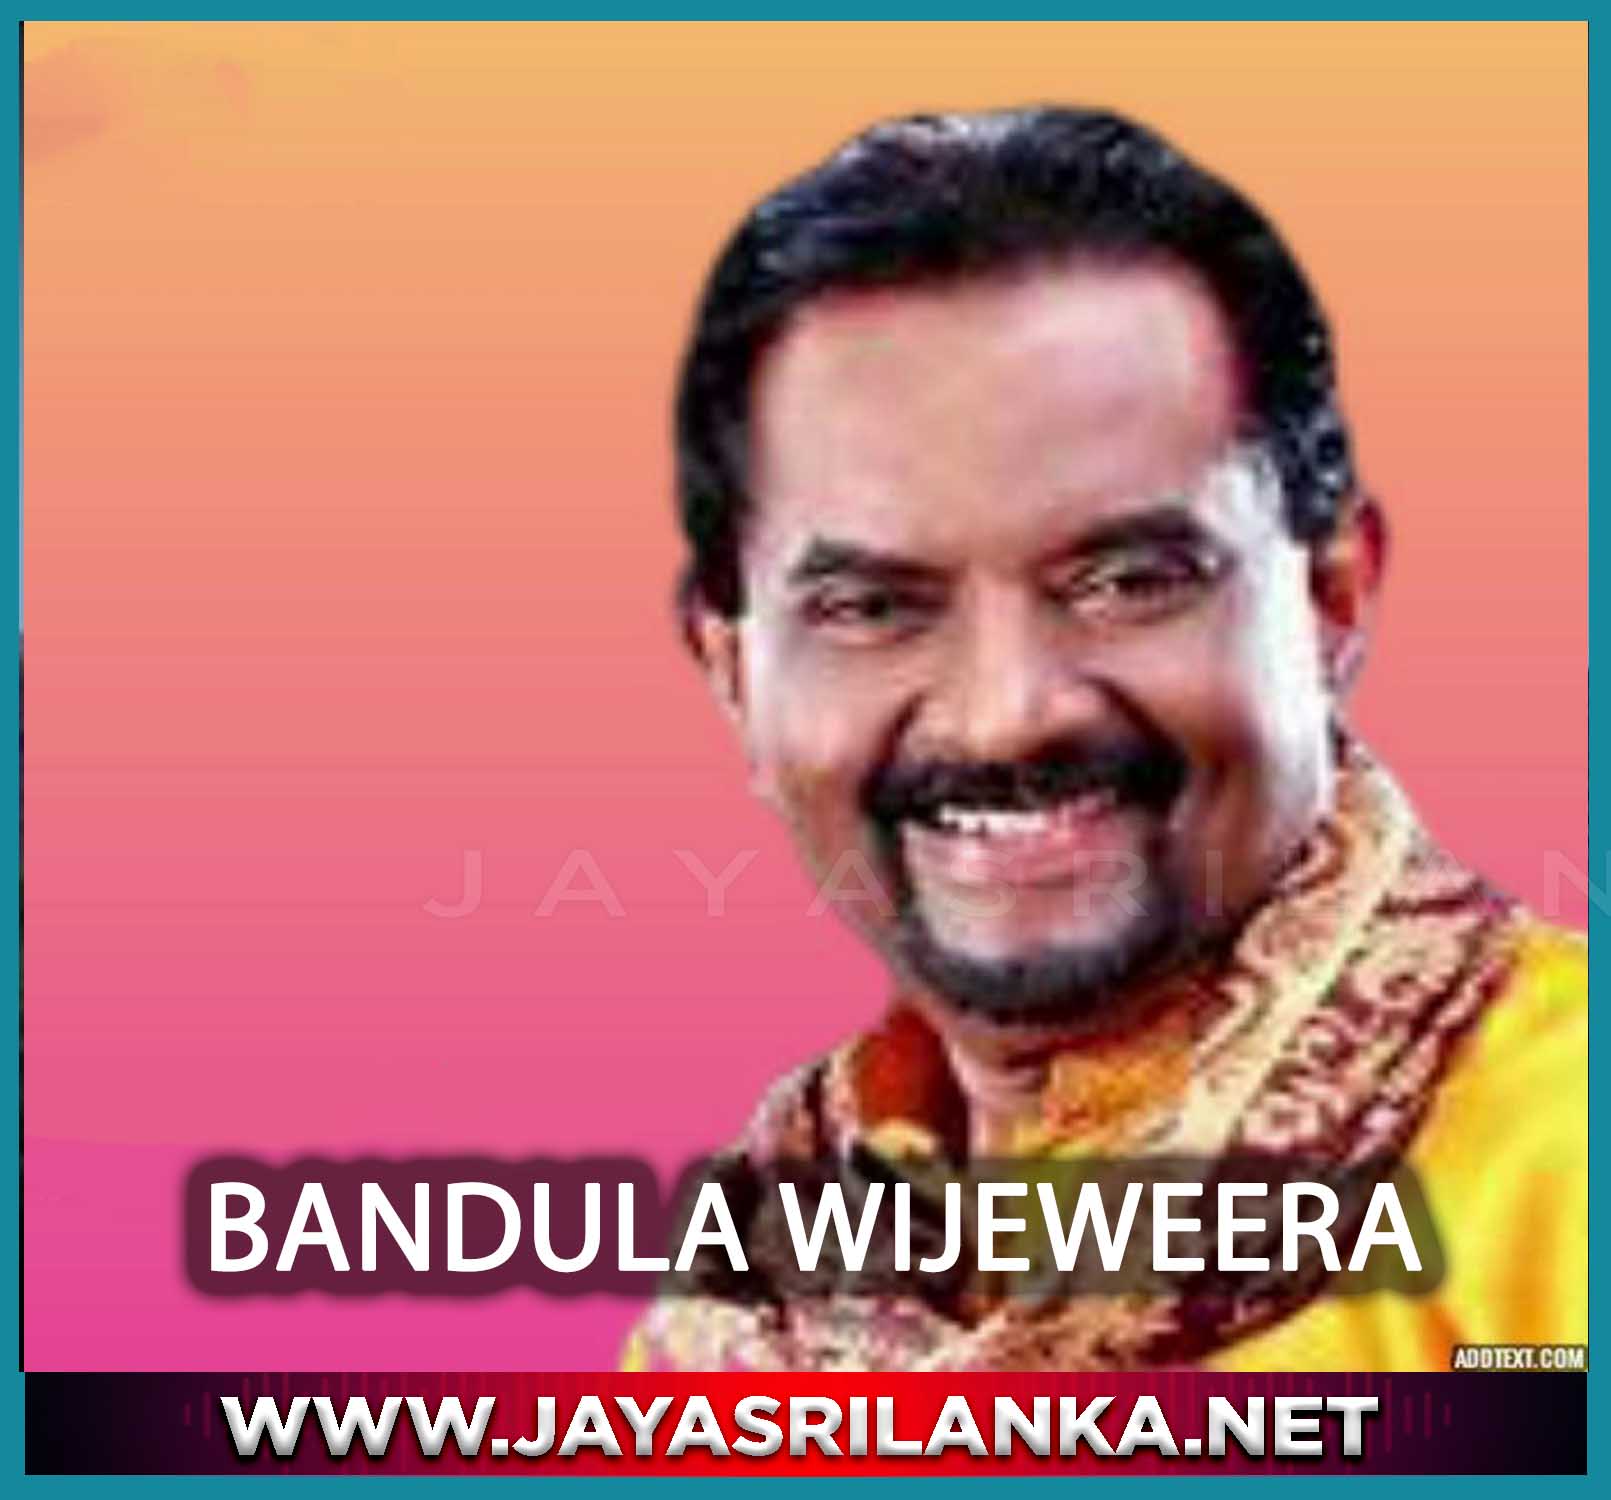 Demassino (Ketharam Kal Giyath) - Bandula Wijeweera And Rodni Warnakula mp3 Image